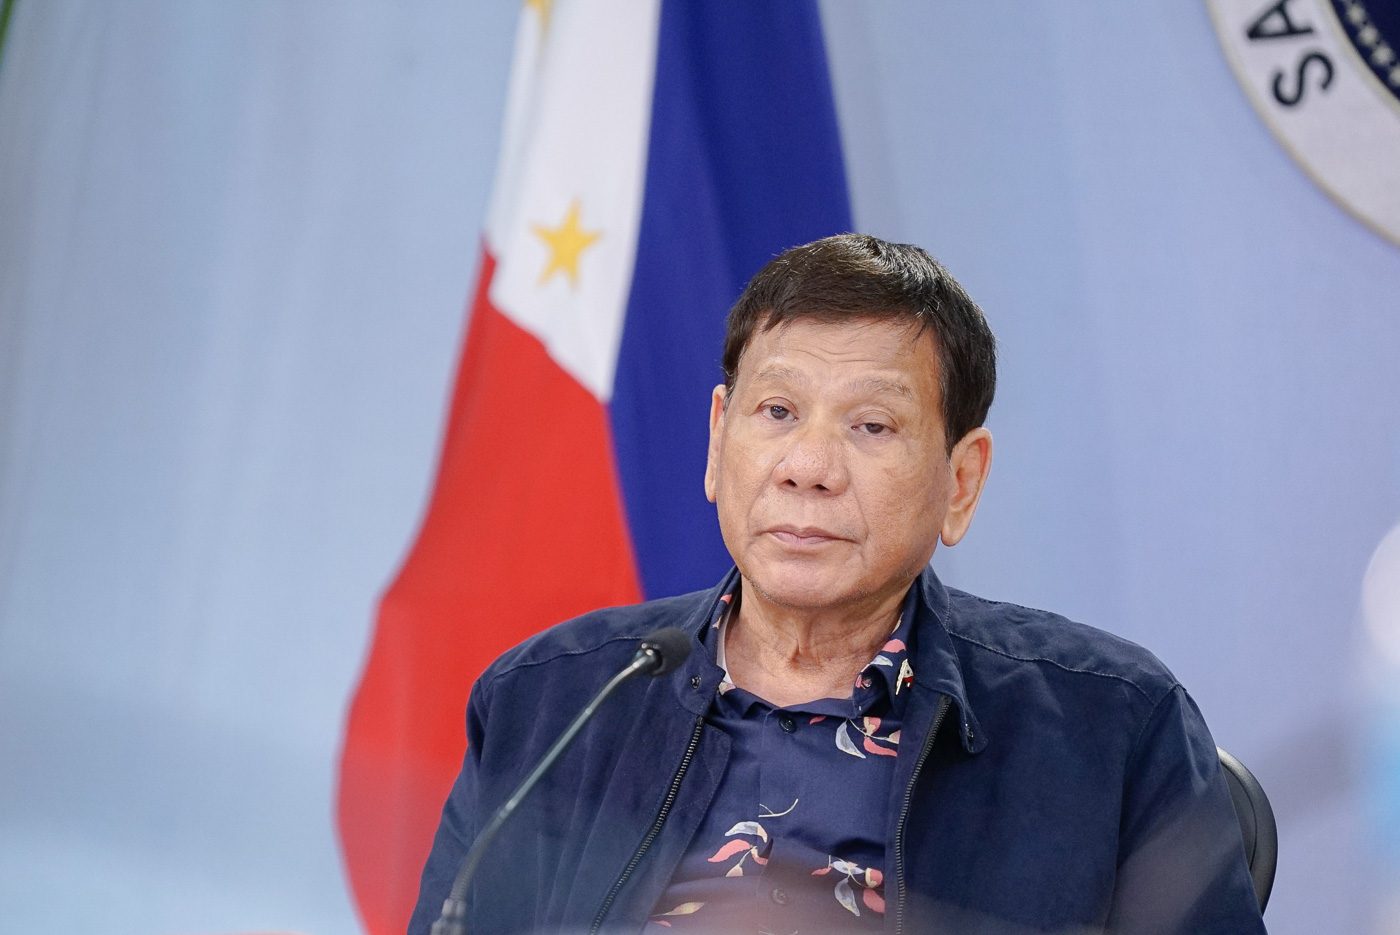 After slamming COA, Duterte hits lawmakers’ hearings on pandemic spending